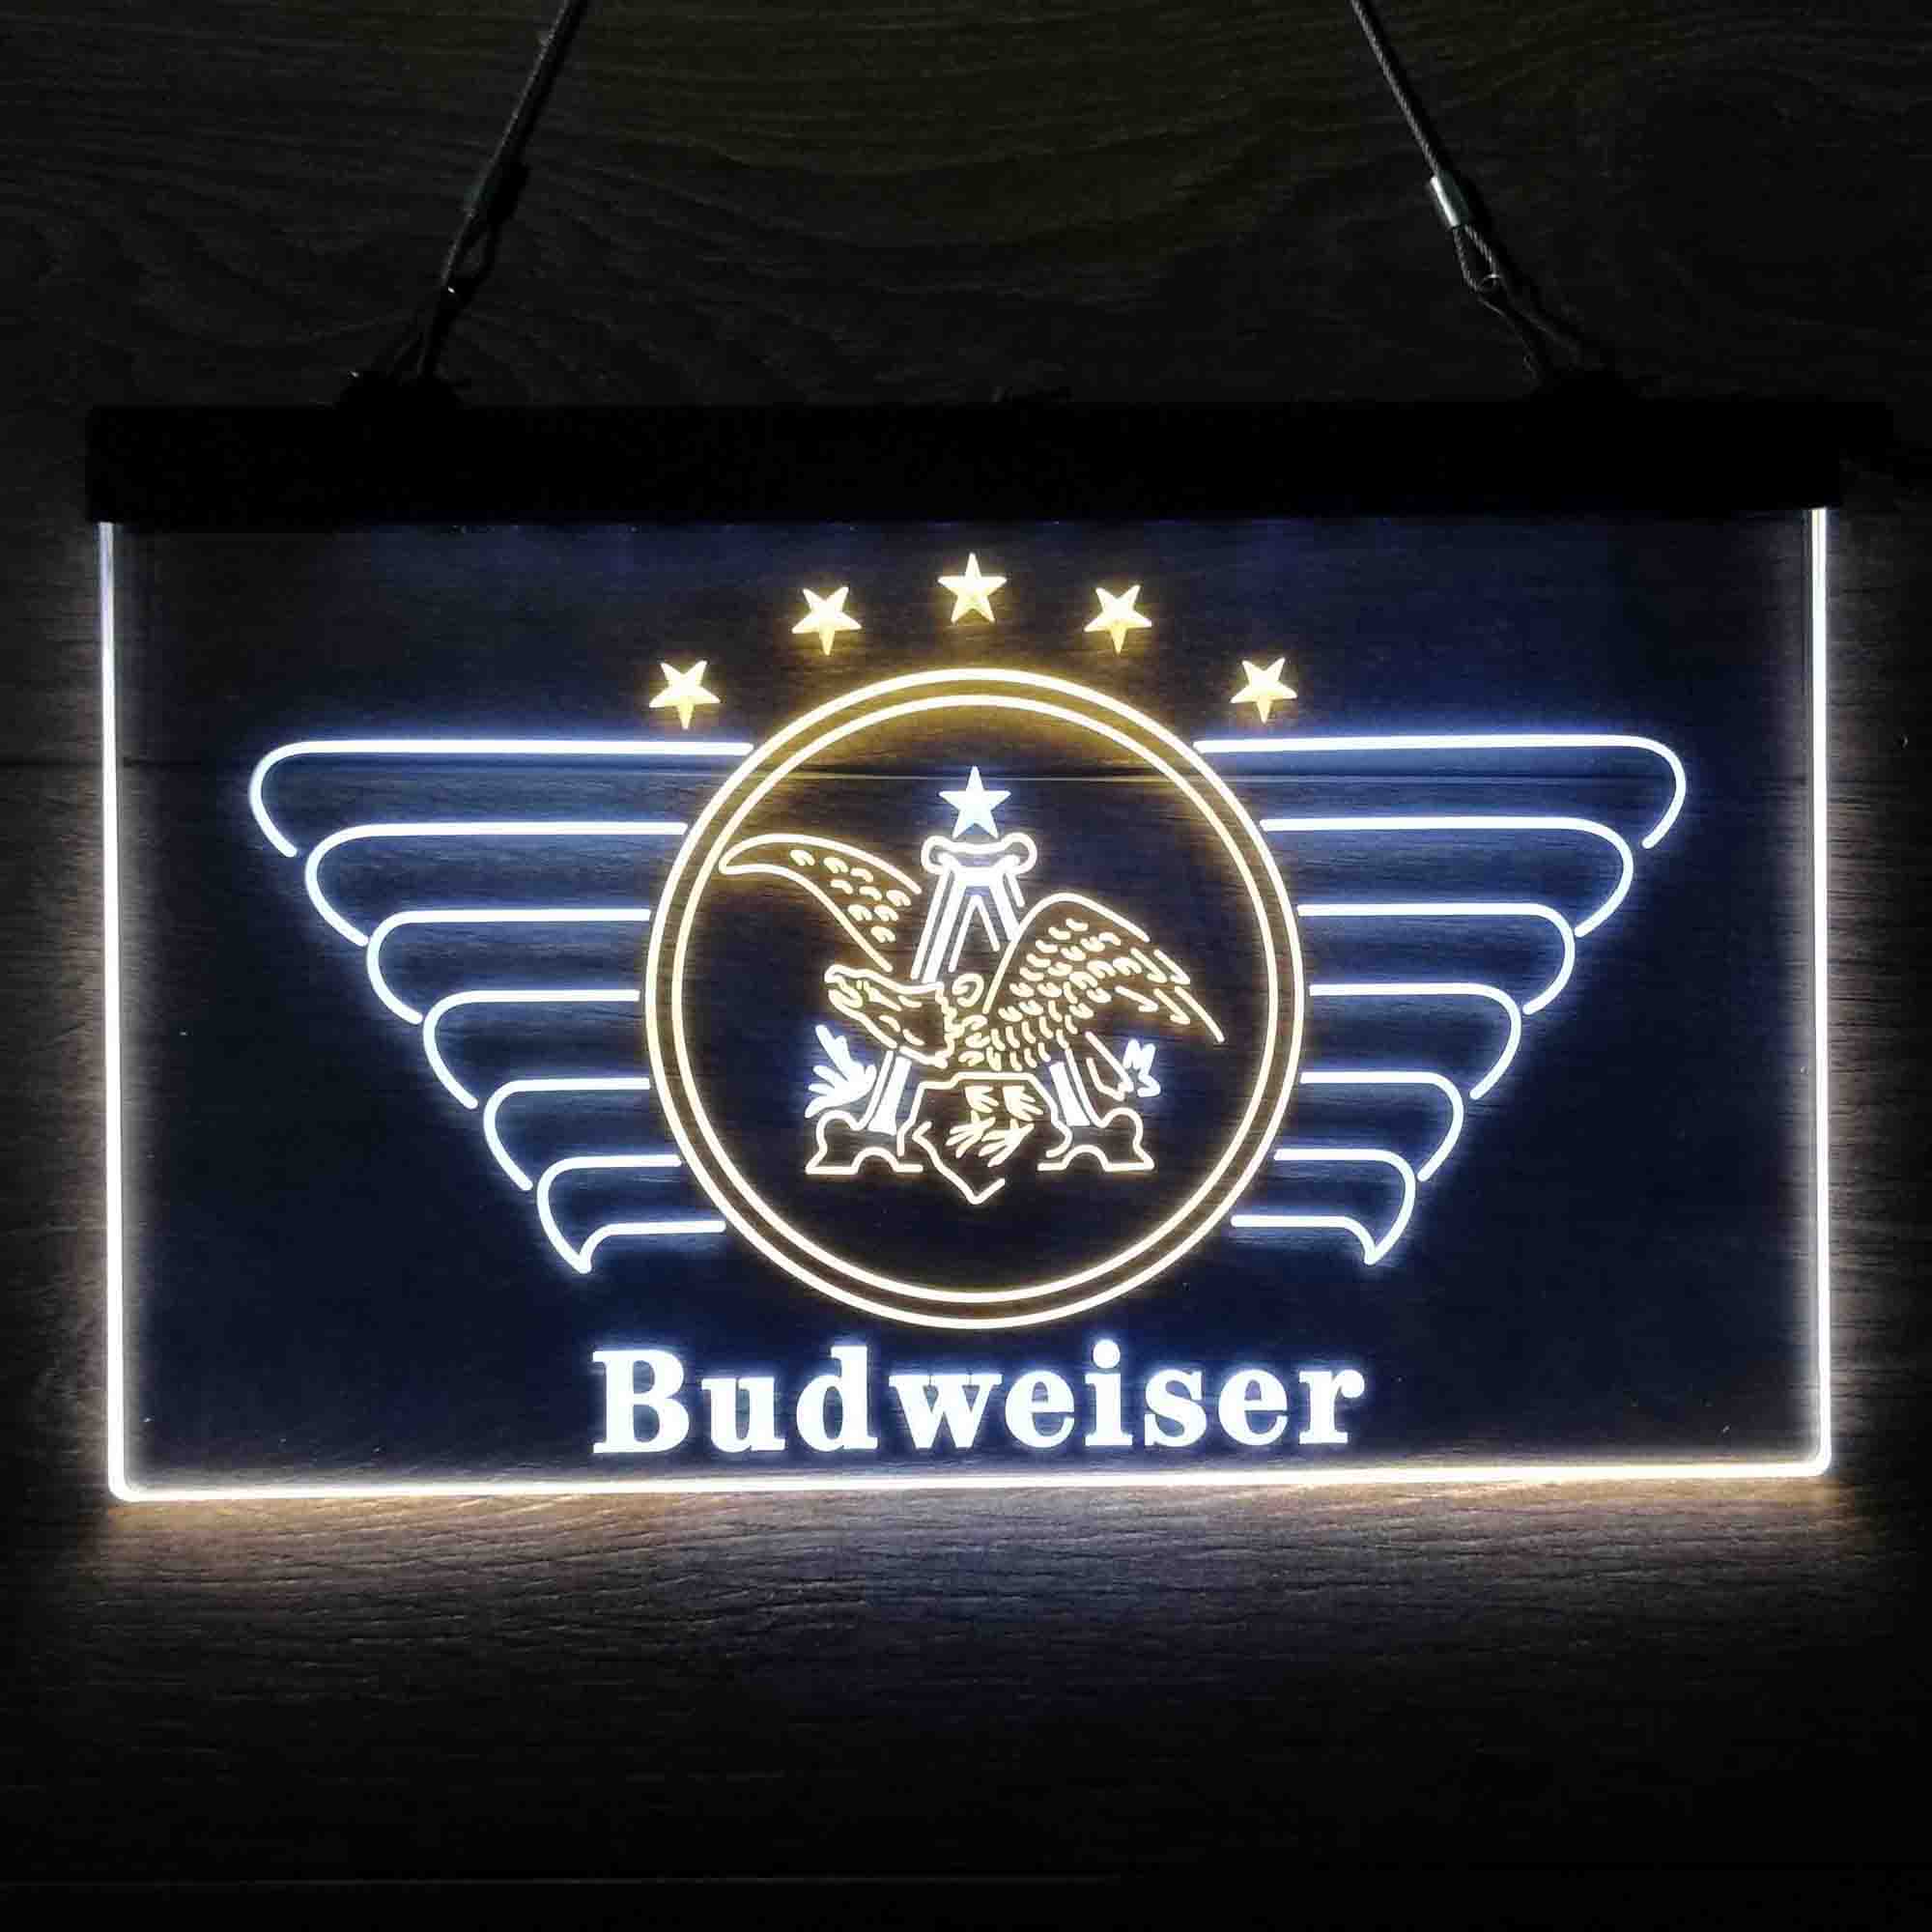 Budweiser Military Led Neon Light Up Sign